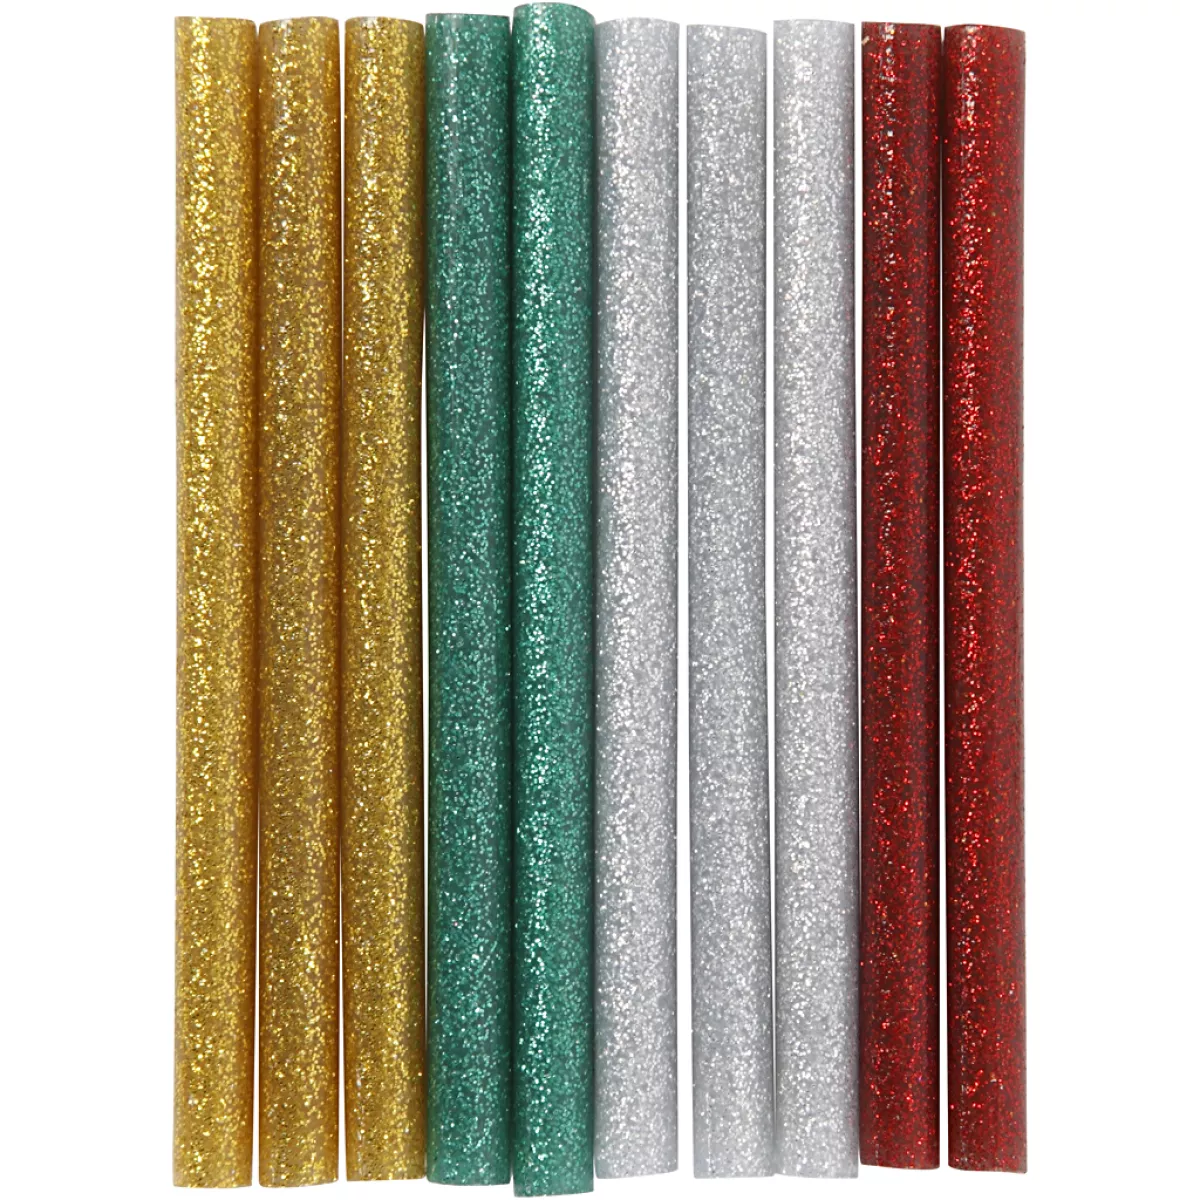 #2 - Limstænger, L: 10 cm, glitter, guld, grøn, rød, sølv, 10 stk./ 1 pk.